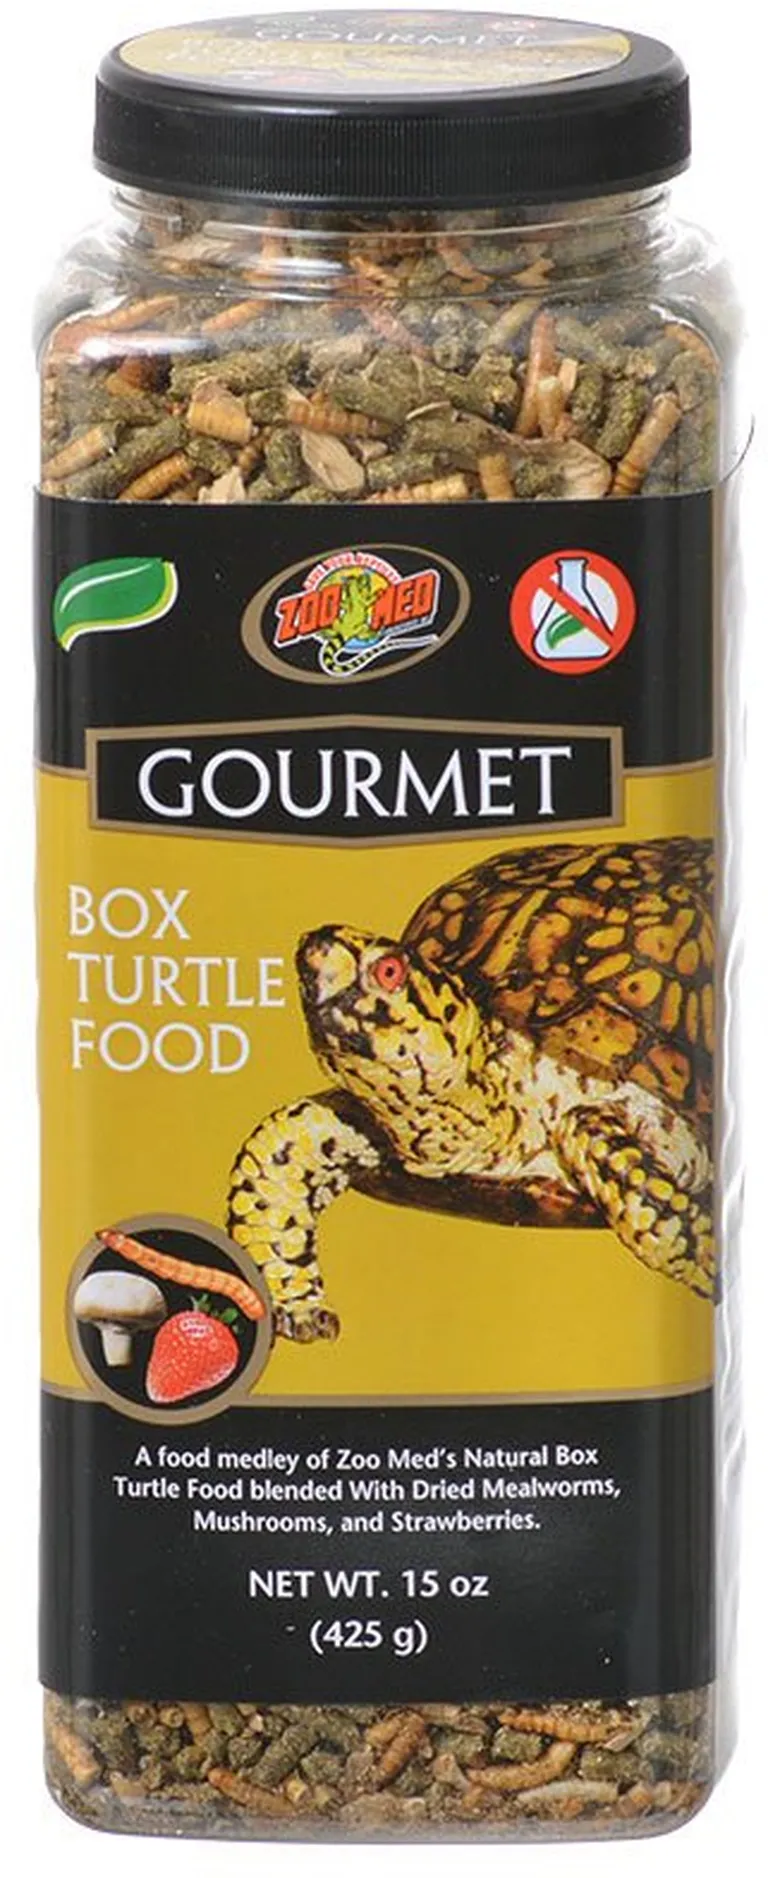 Zoo Med Gourmet Box Turtle Food Photo 2